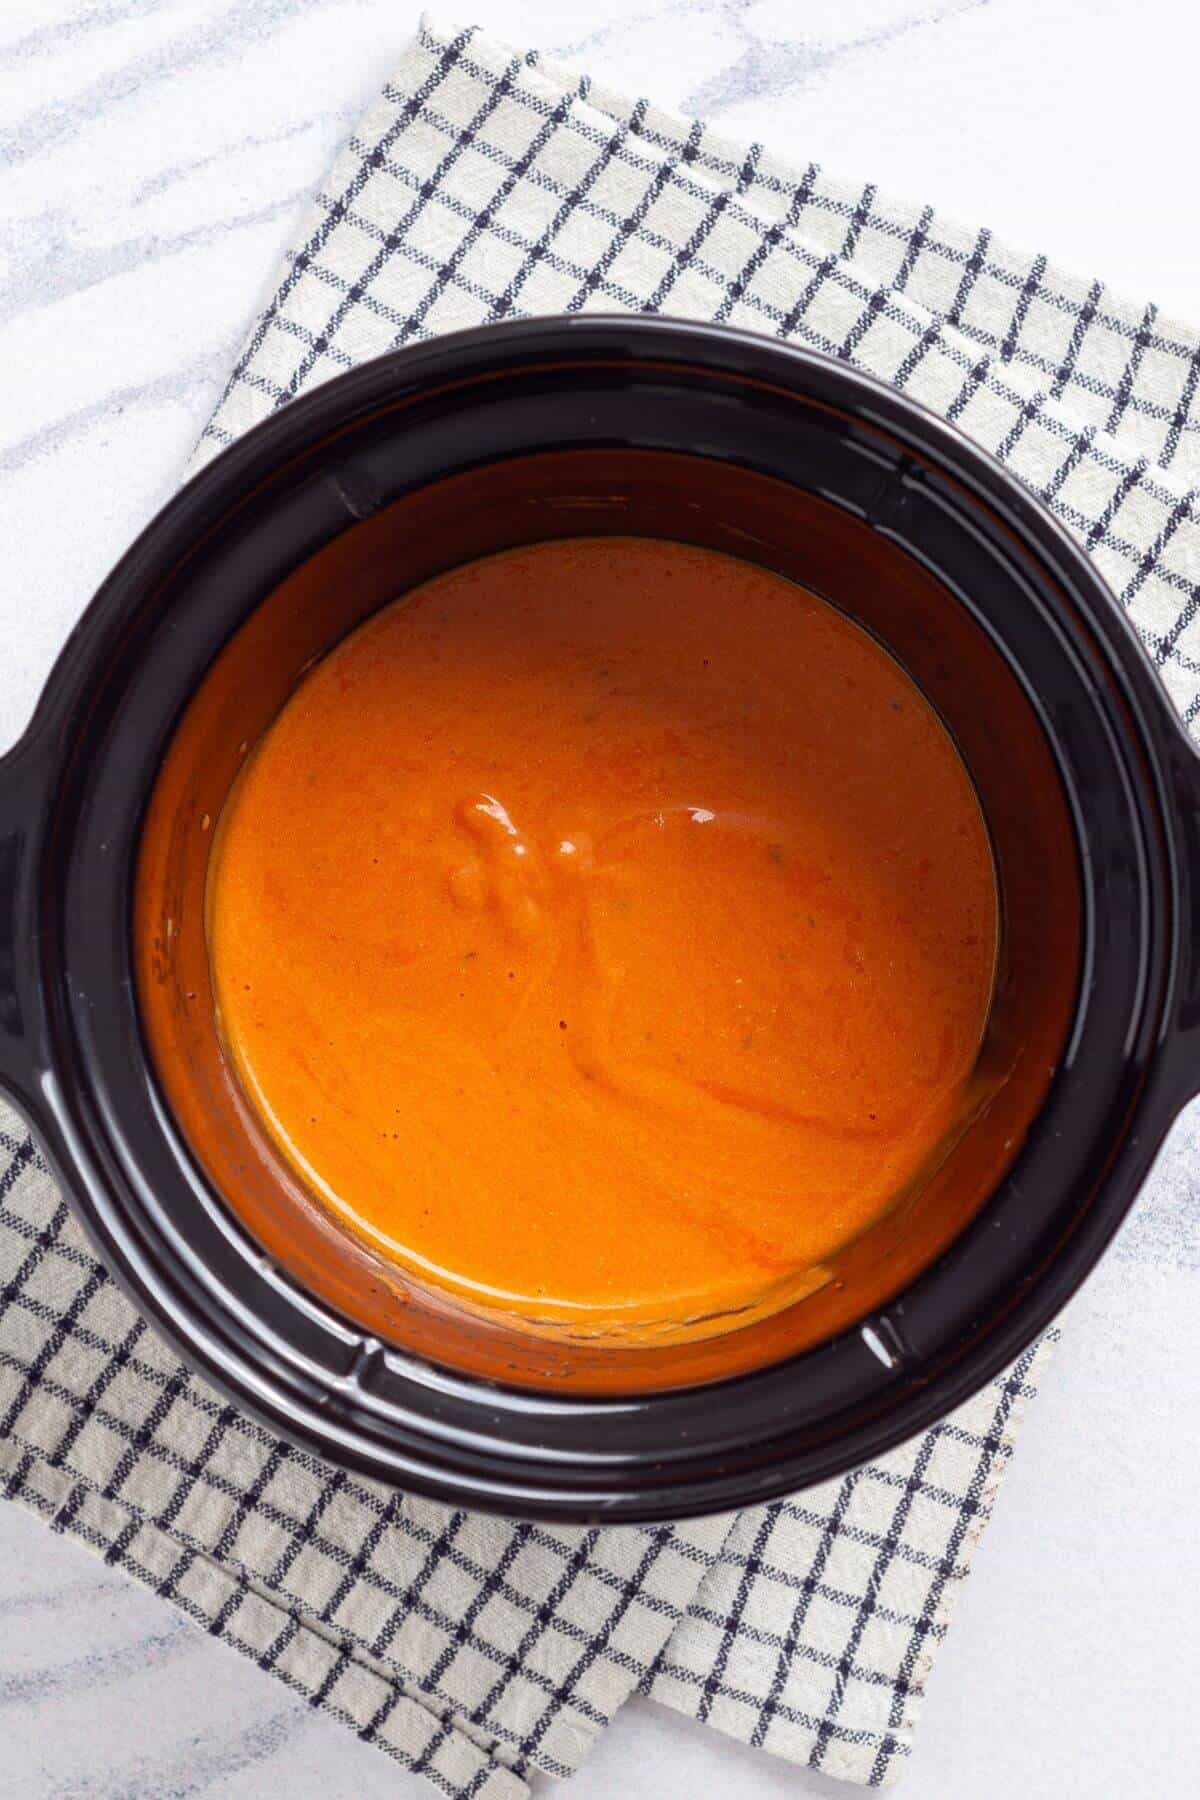 A crock pot of tomato soup on a checkered napkin.